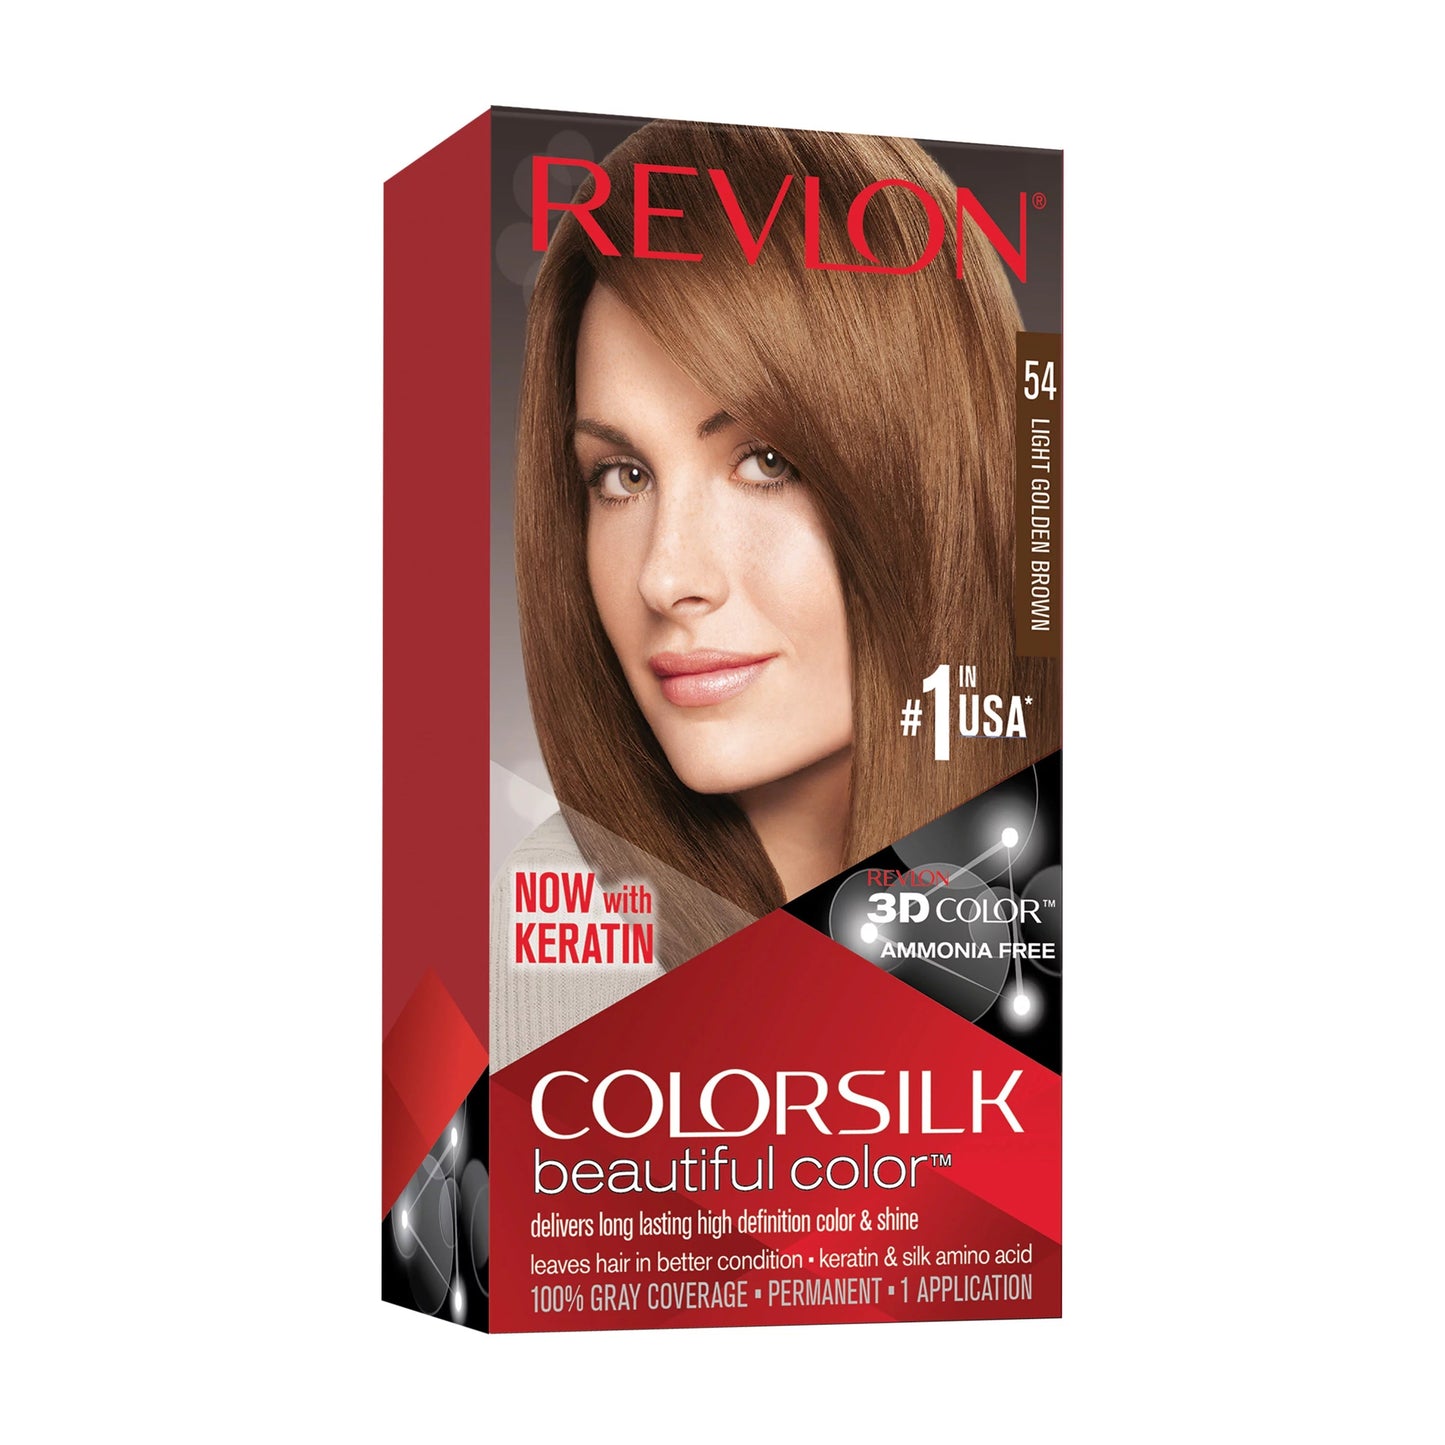 Revlon Colorsilk Hair Color 54 Light Golden Brown USA - 1ct/3PK